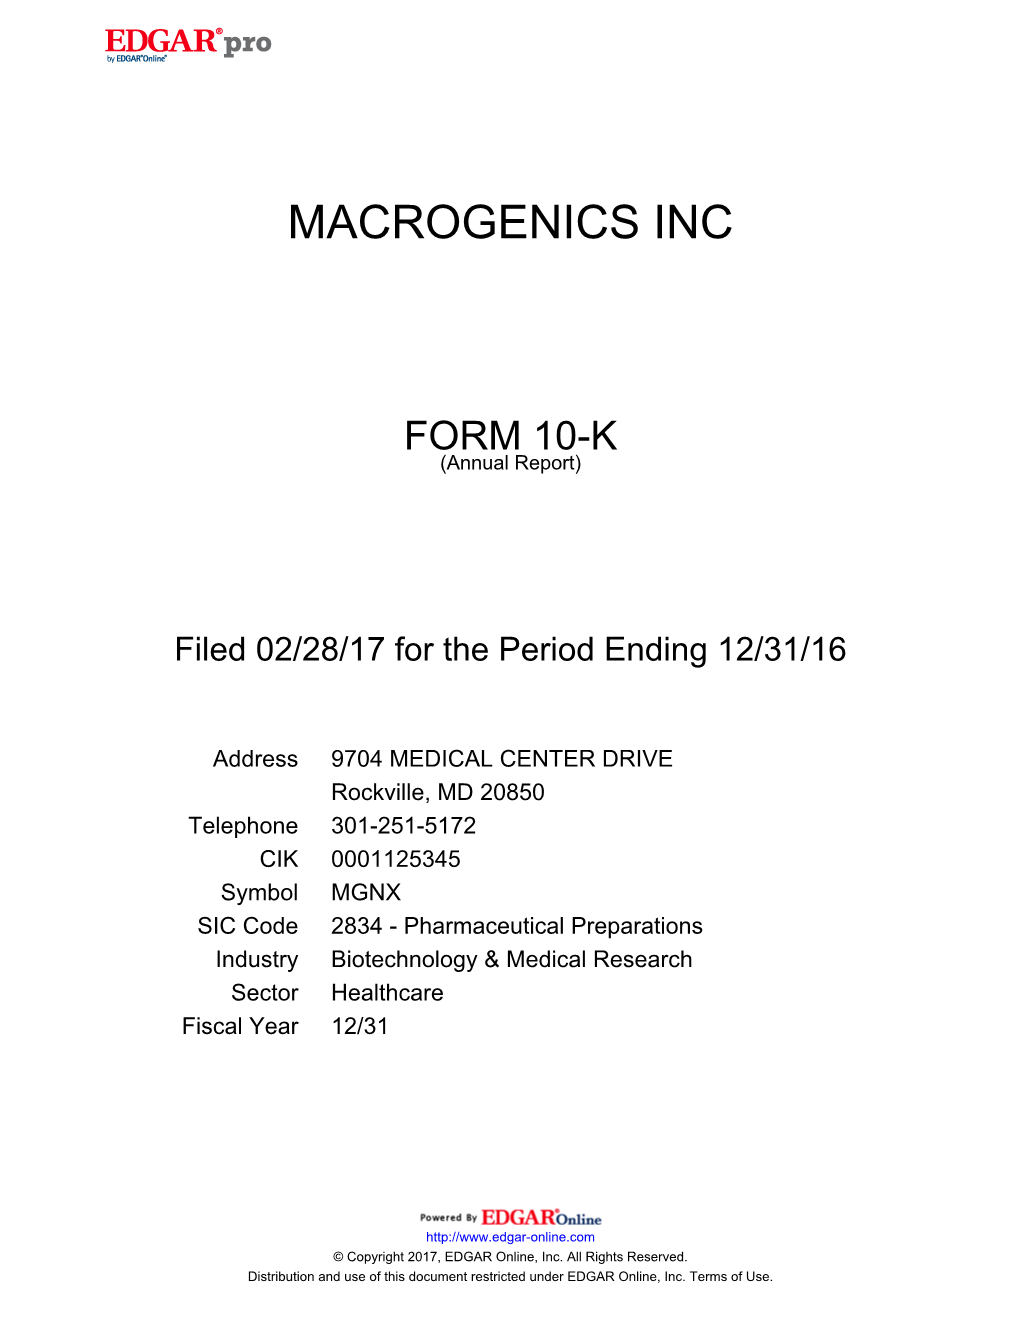 Macrogenics Inc